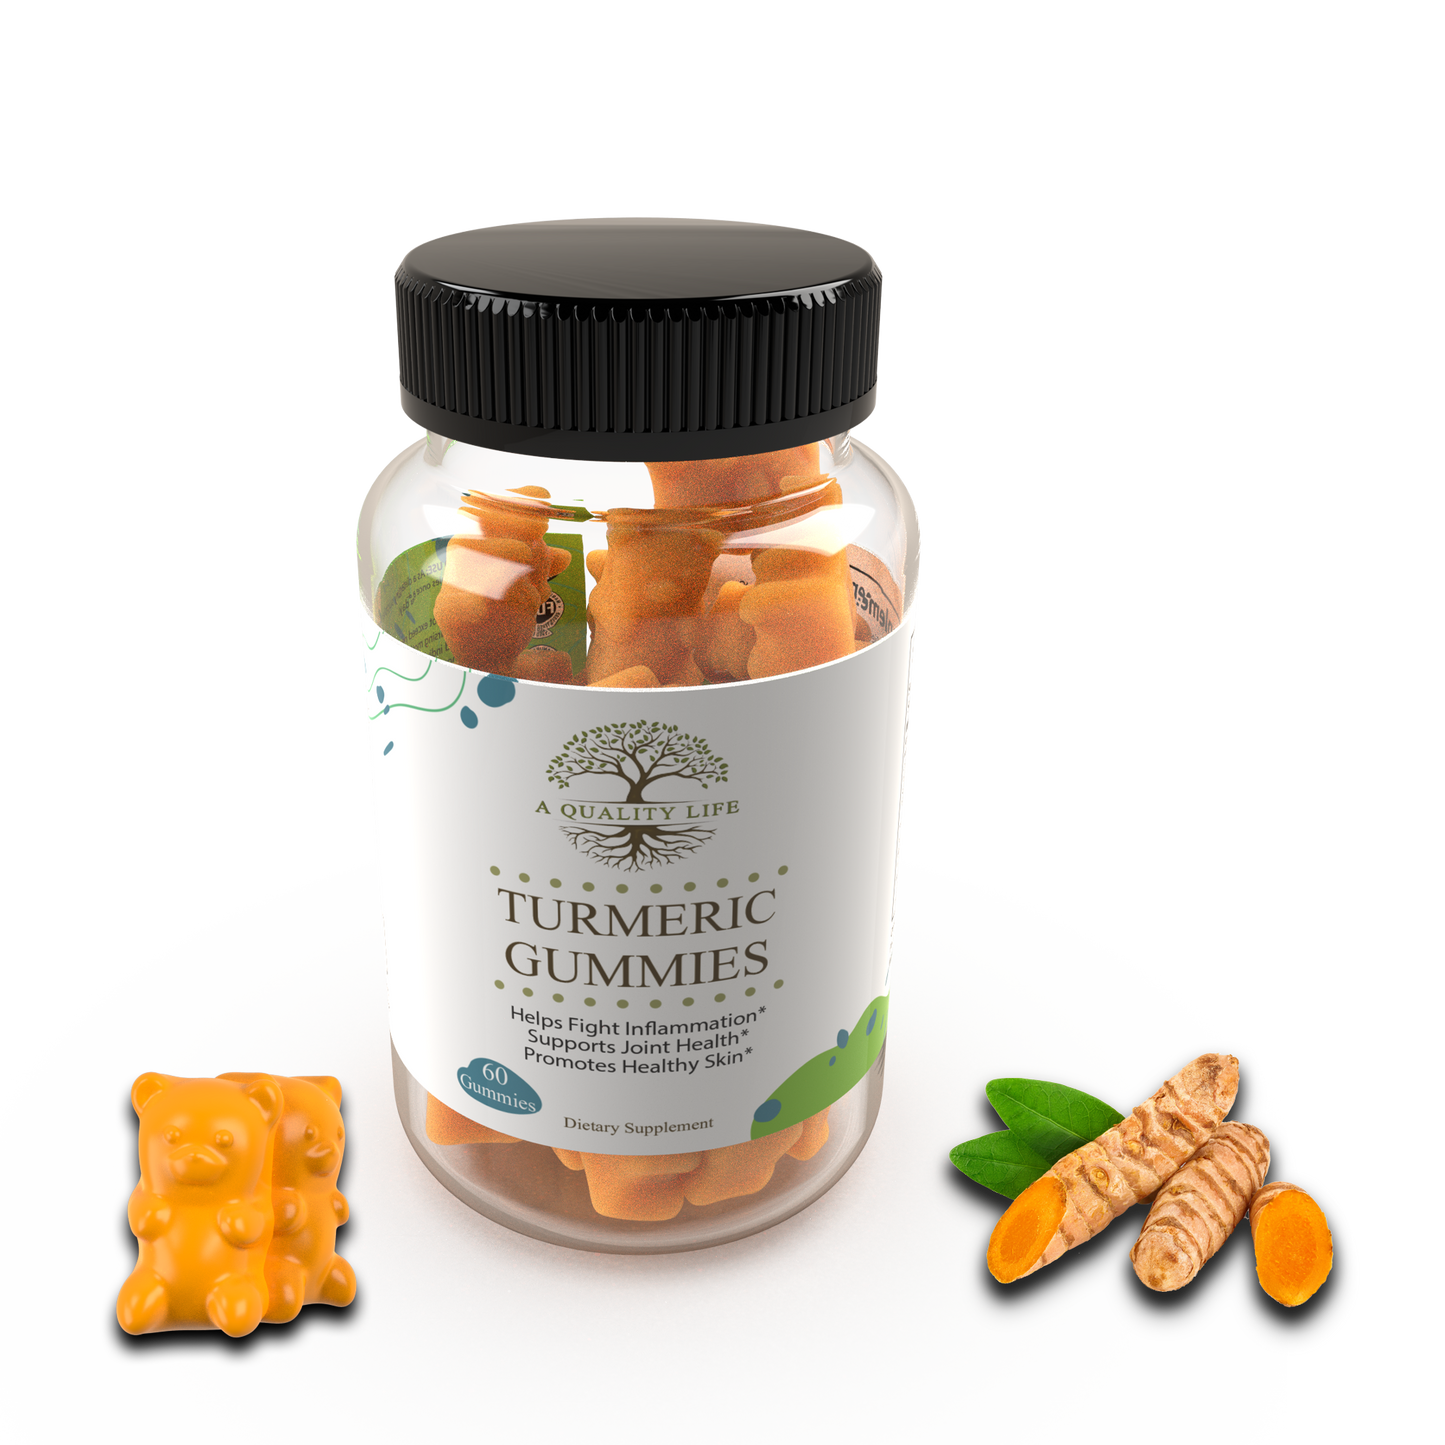 Turmeric Gummies by A Quality Life Nutrition